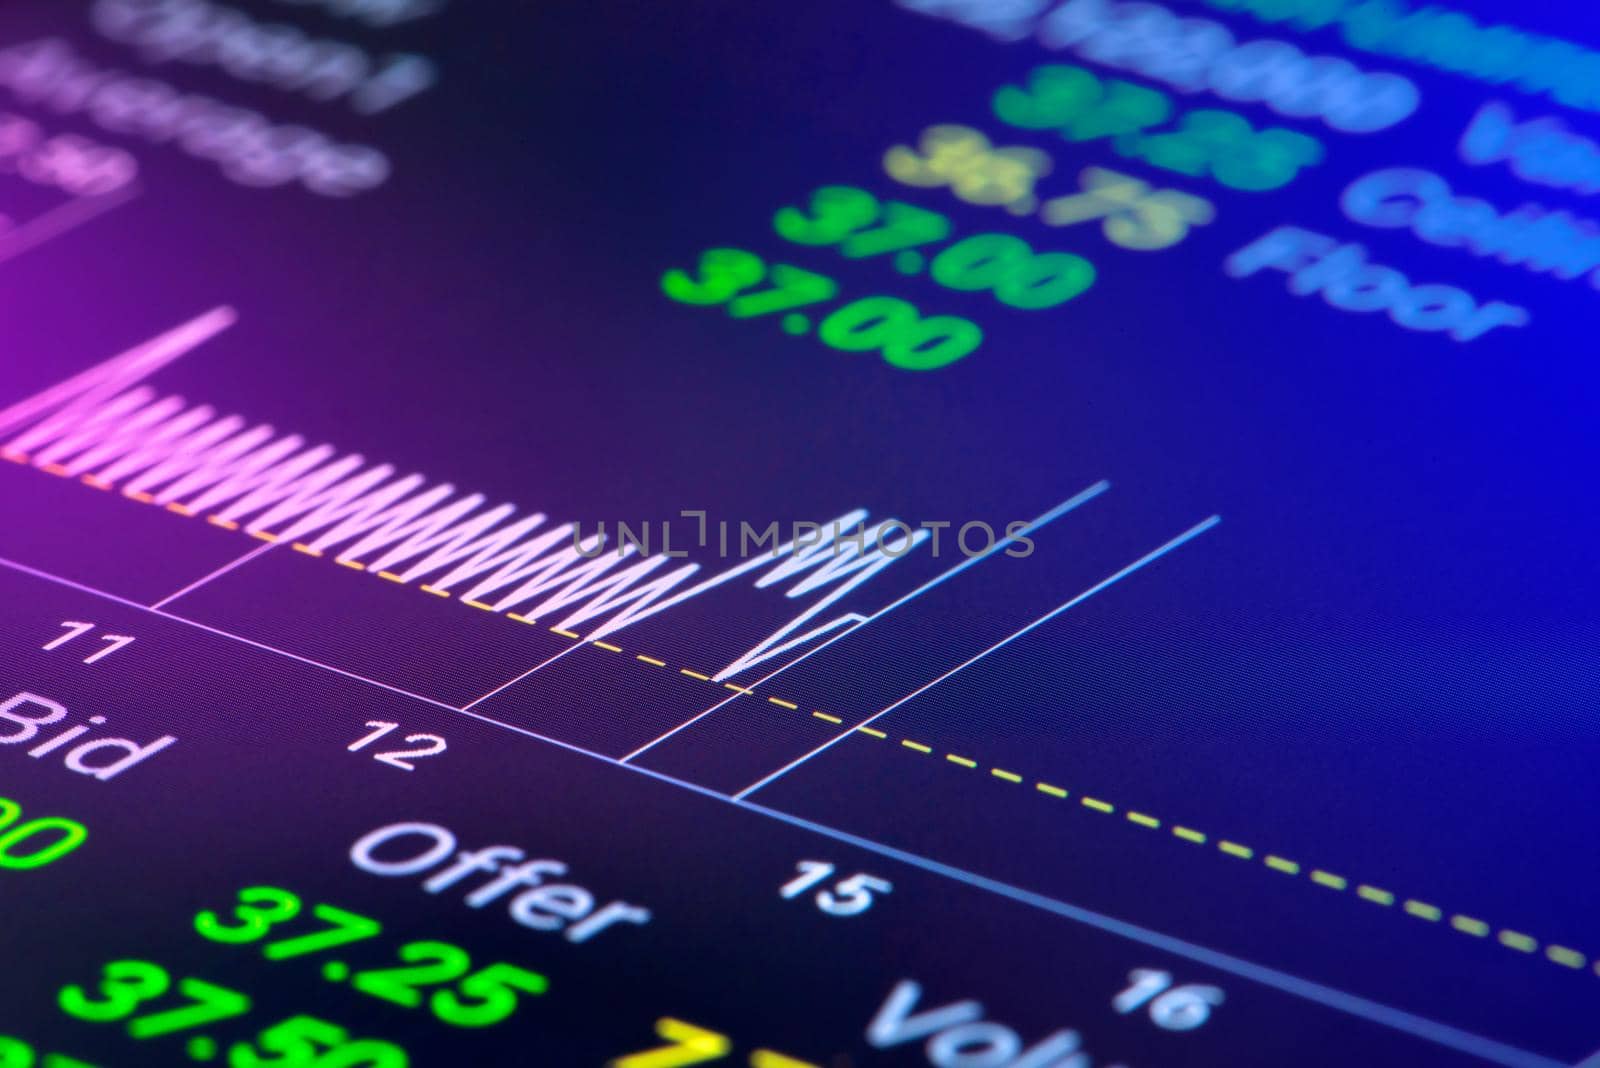 Stock market chart,Stock market data on LED display concept.